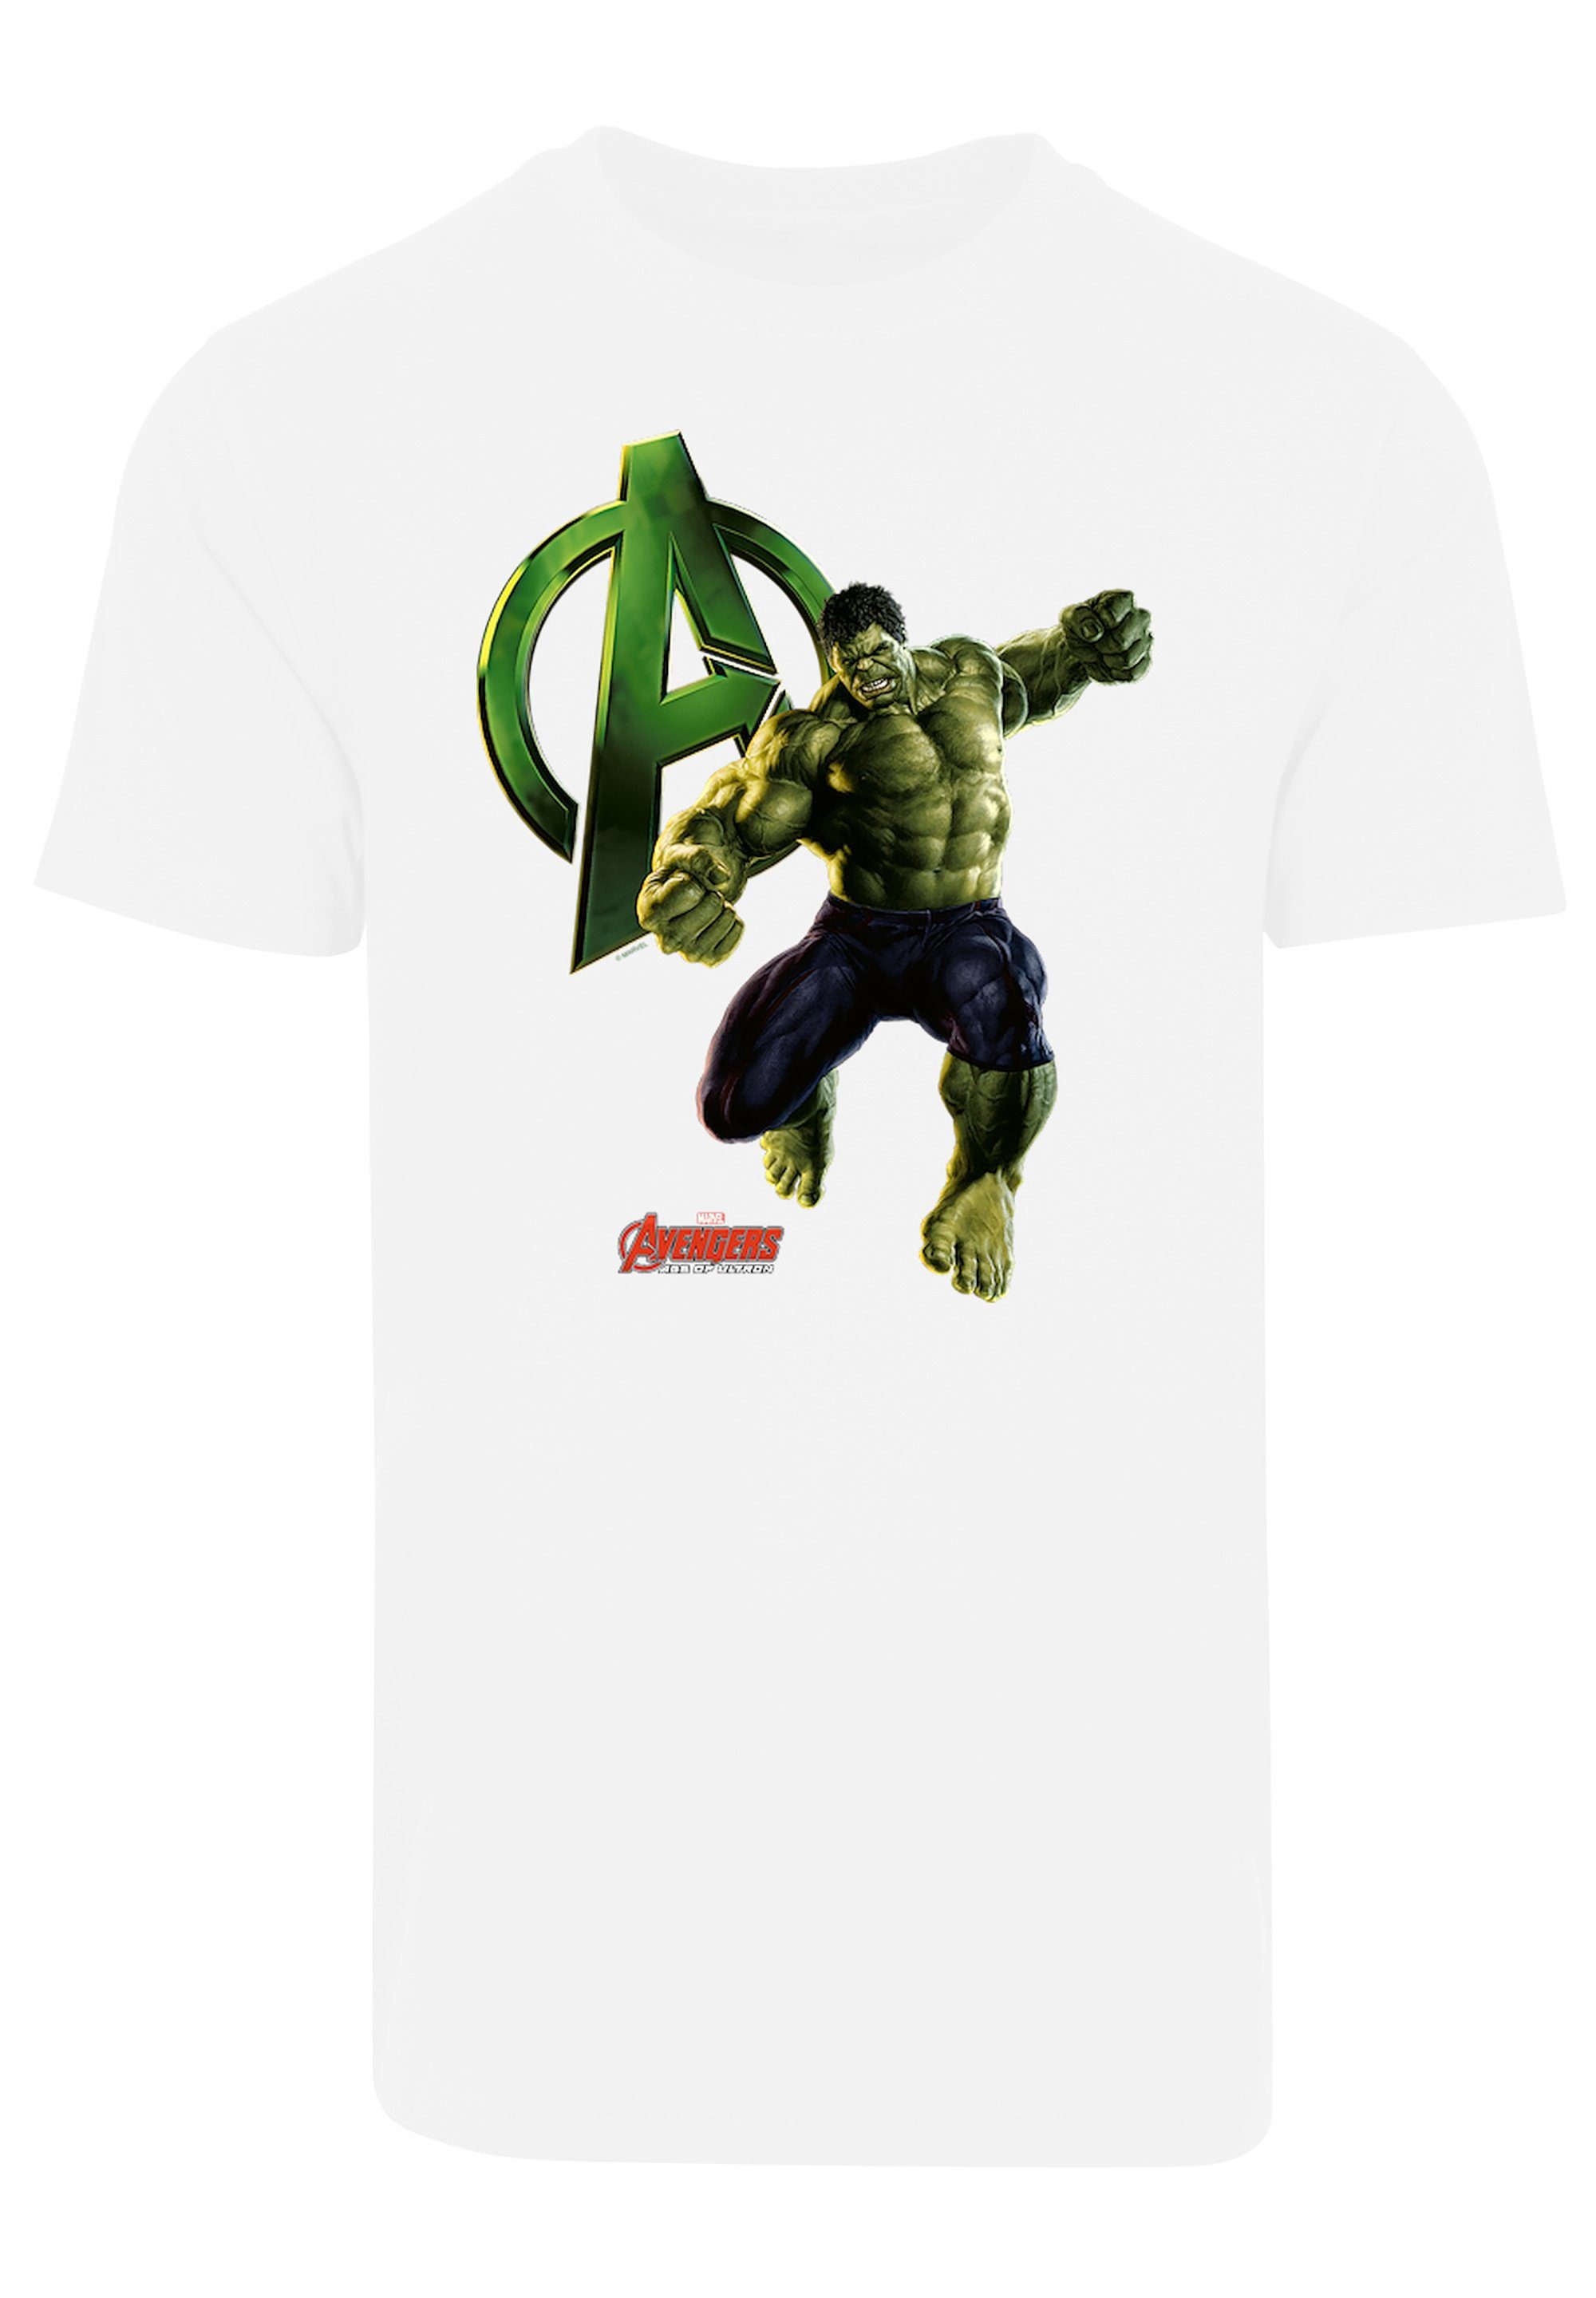 F4NT4STIC T-Shirt Marvel Age Ultron of Avengers Hulk Incredible Print